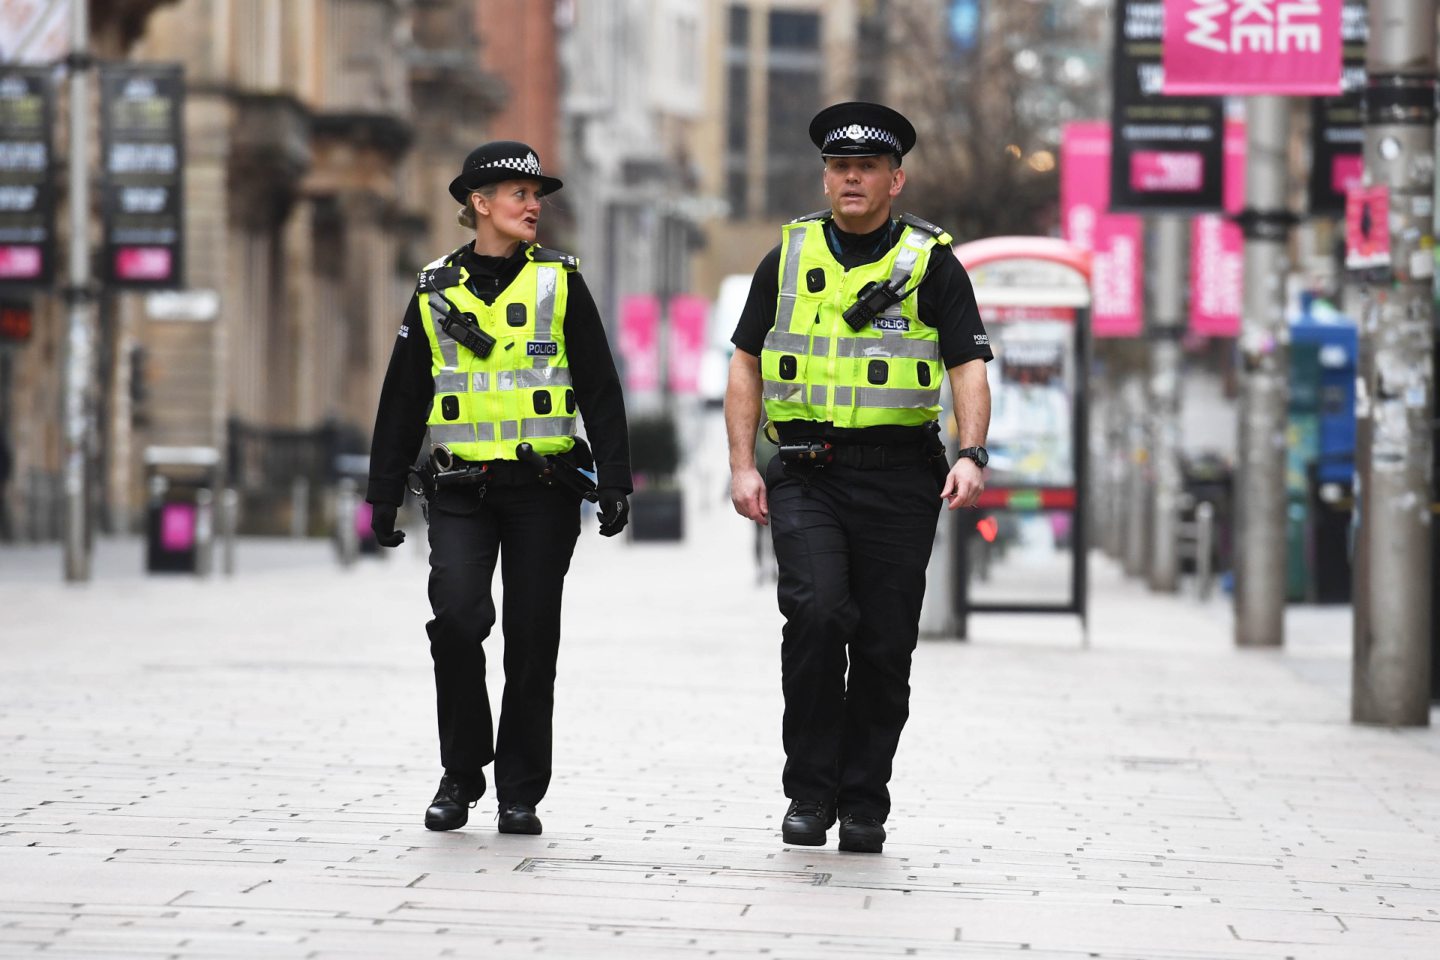 Police patrol the streets of Glasgow during the coronavirus lockdown.